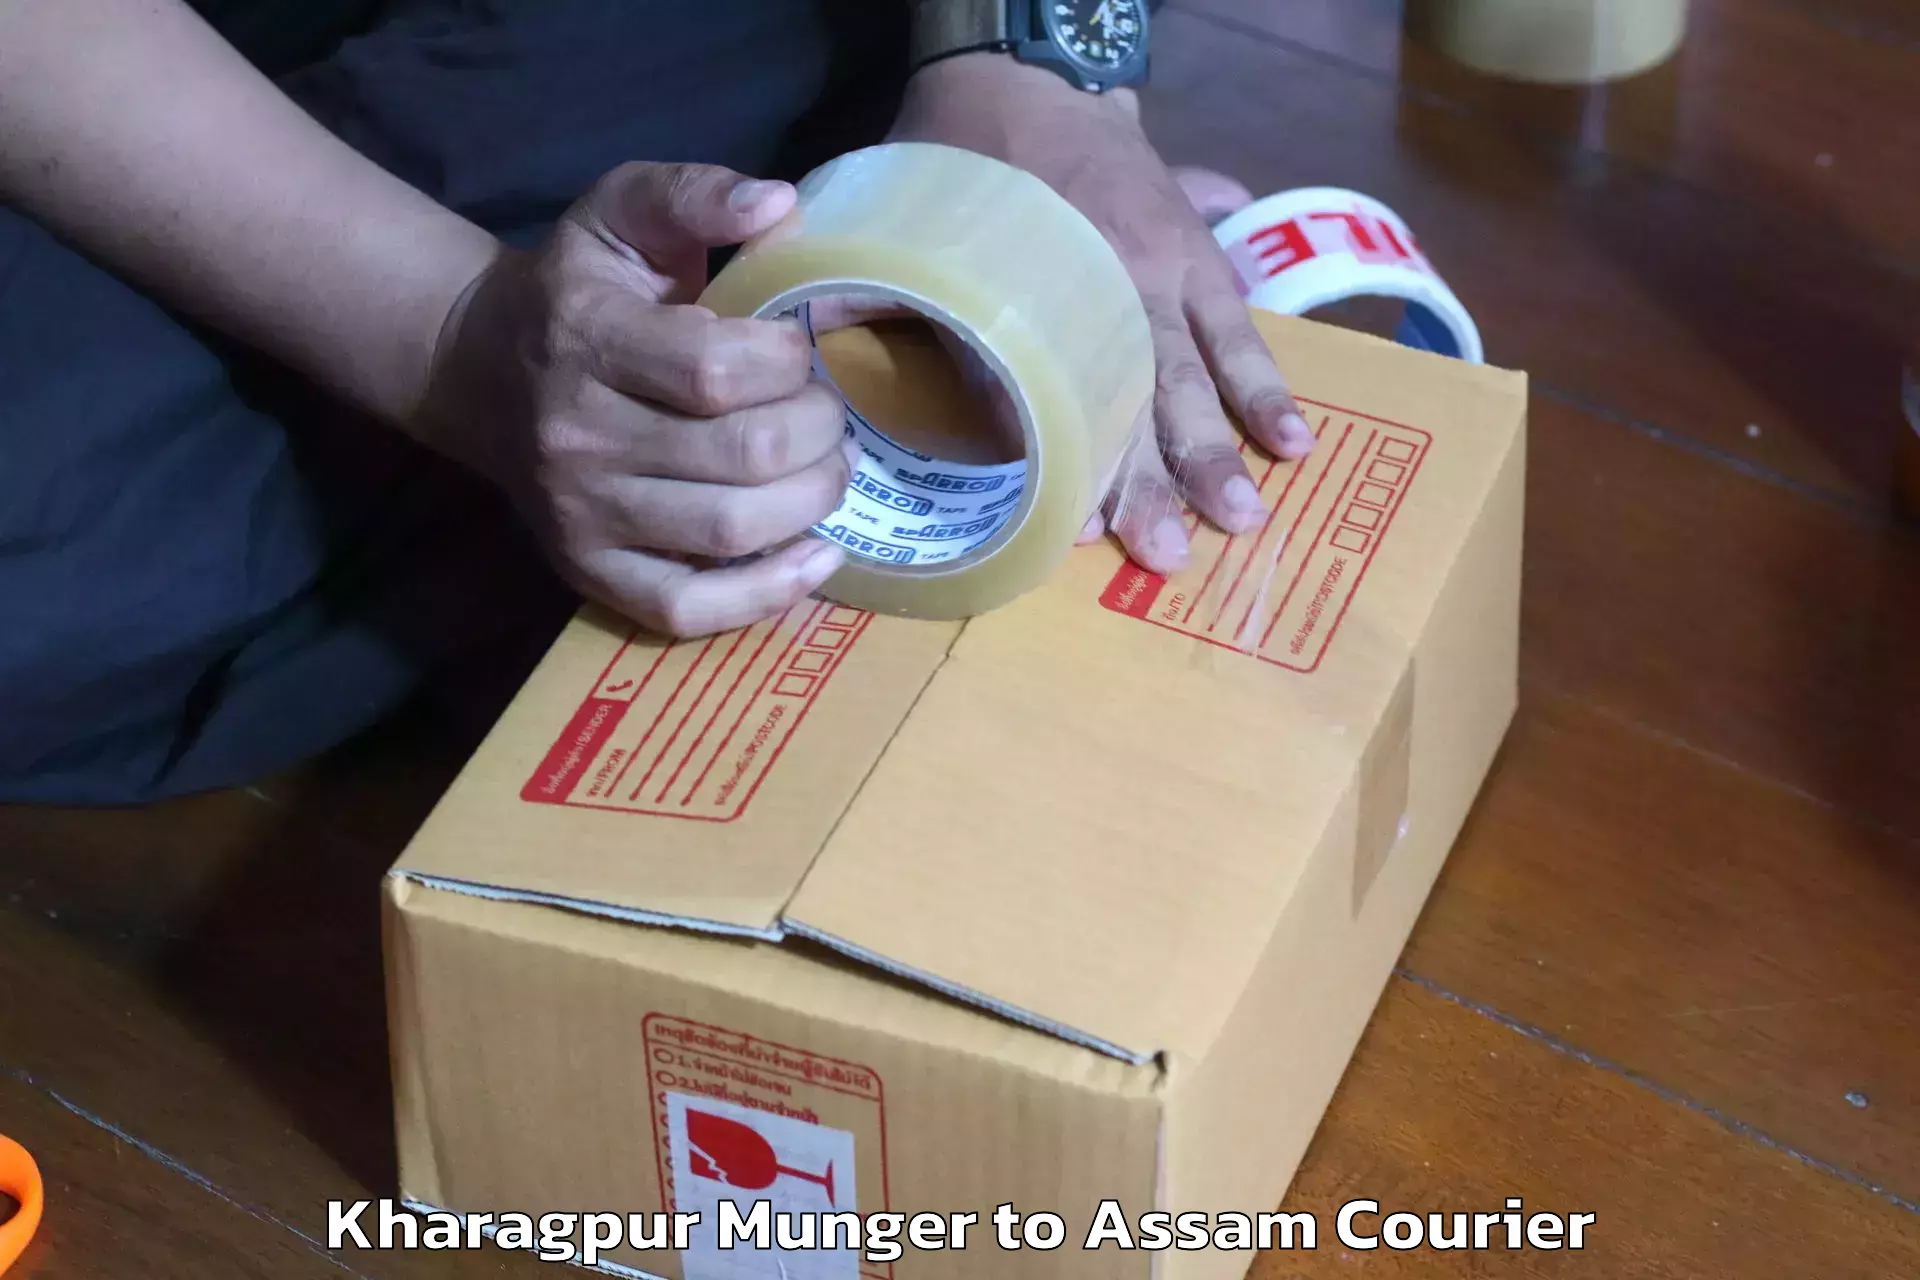 Furniture moving experts Kharagpur Munger to Assam